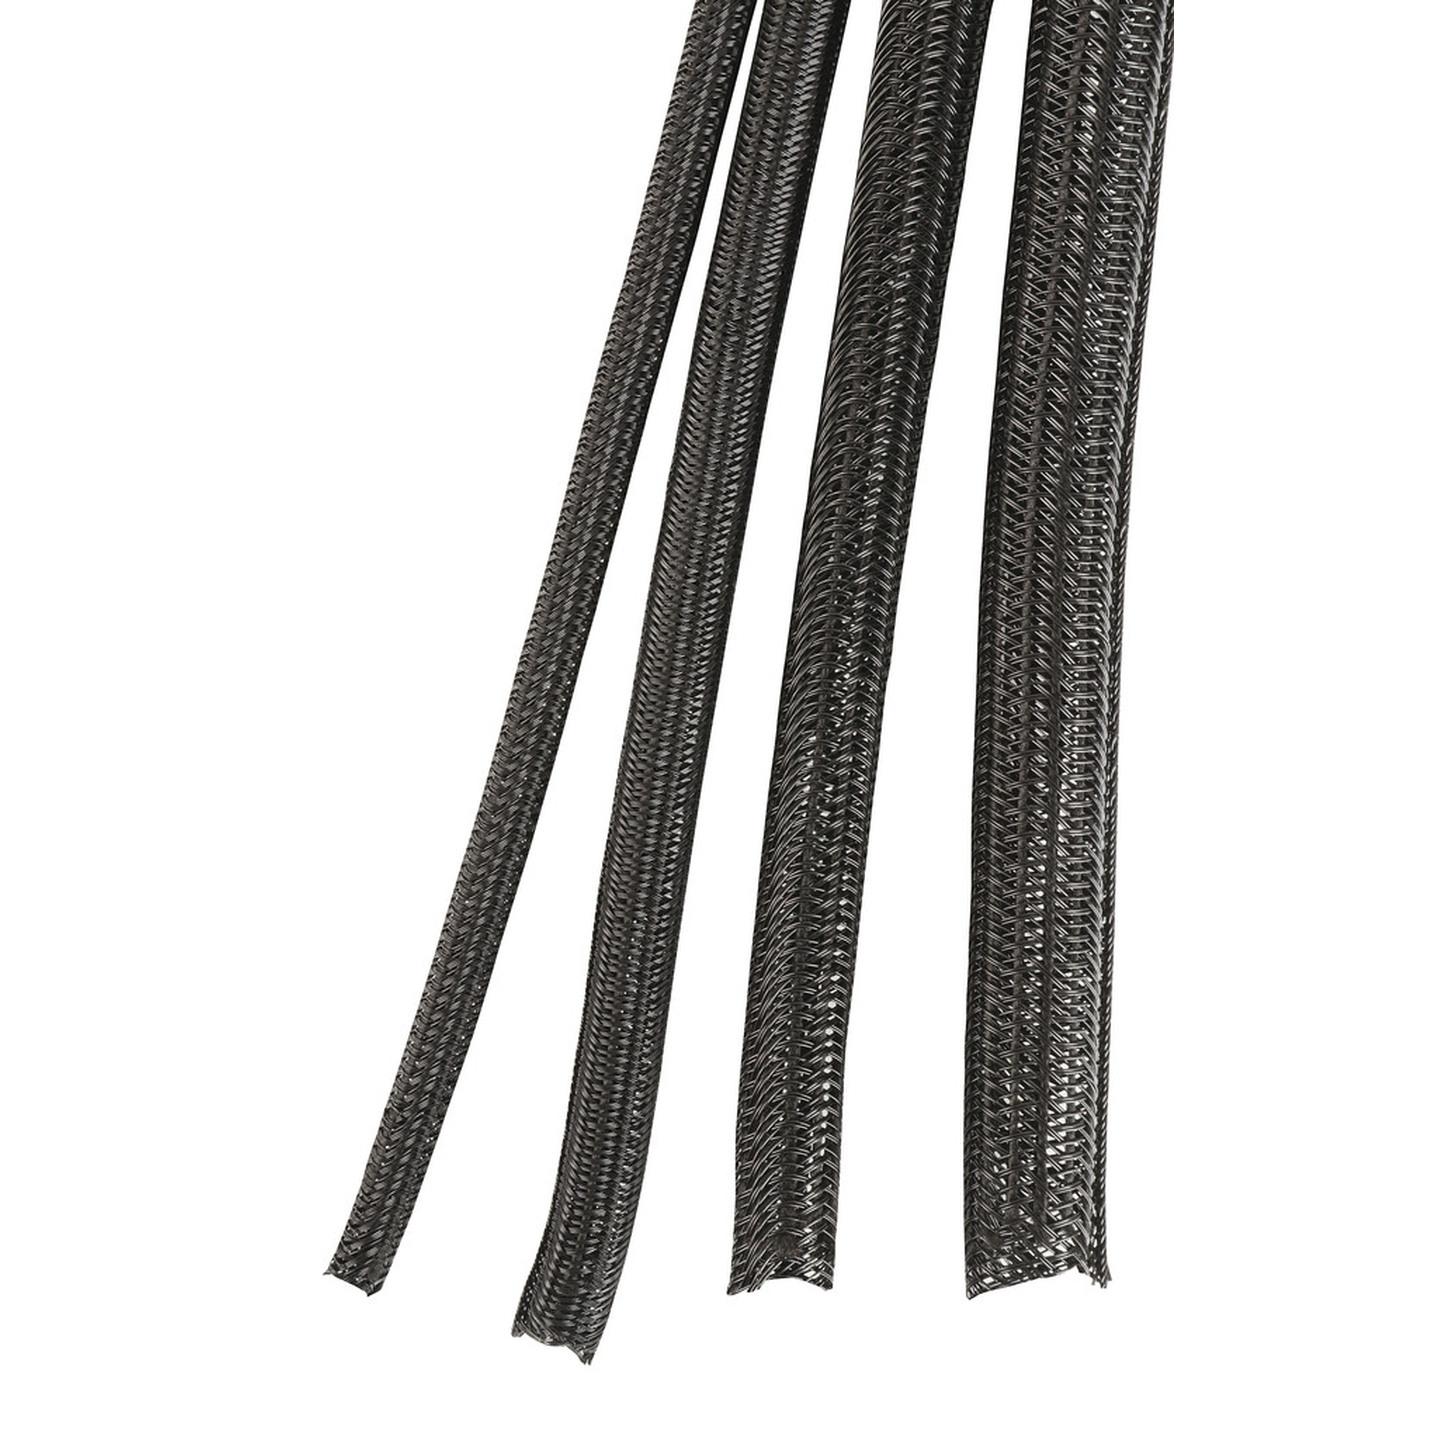 Self-closing Braided Wire Wrap - 19mm x 2m